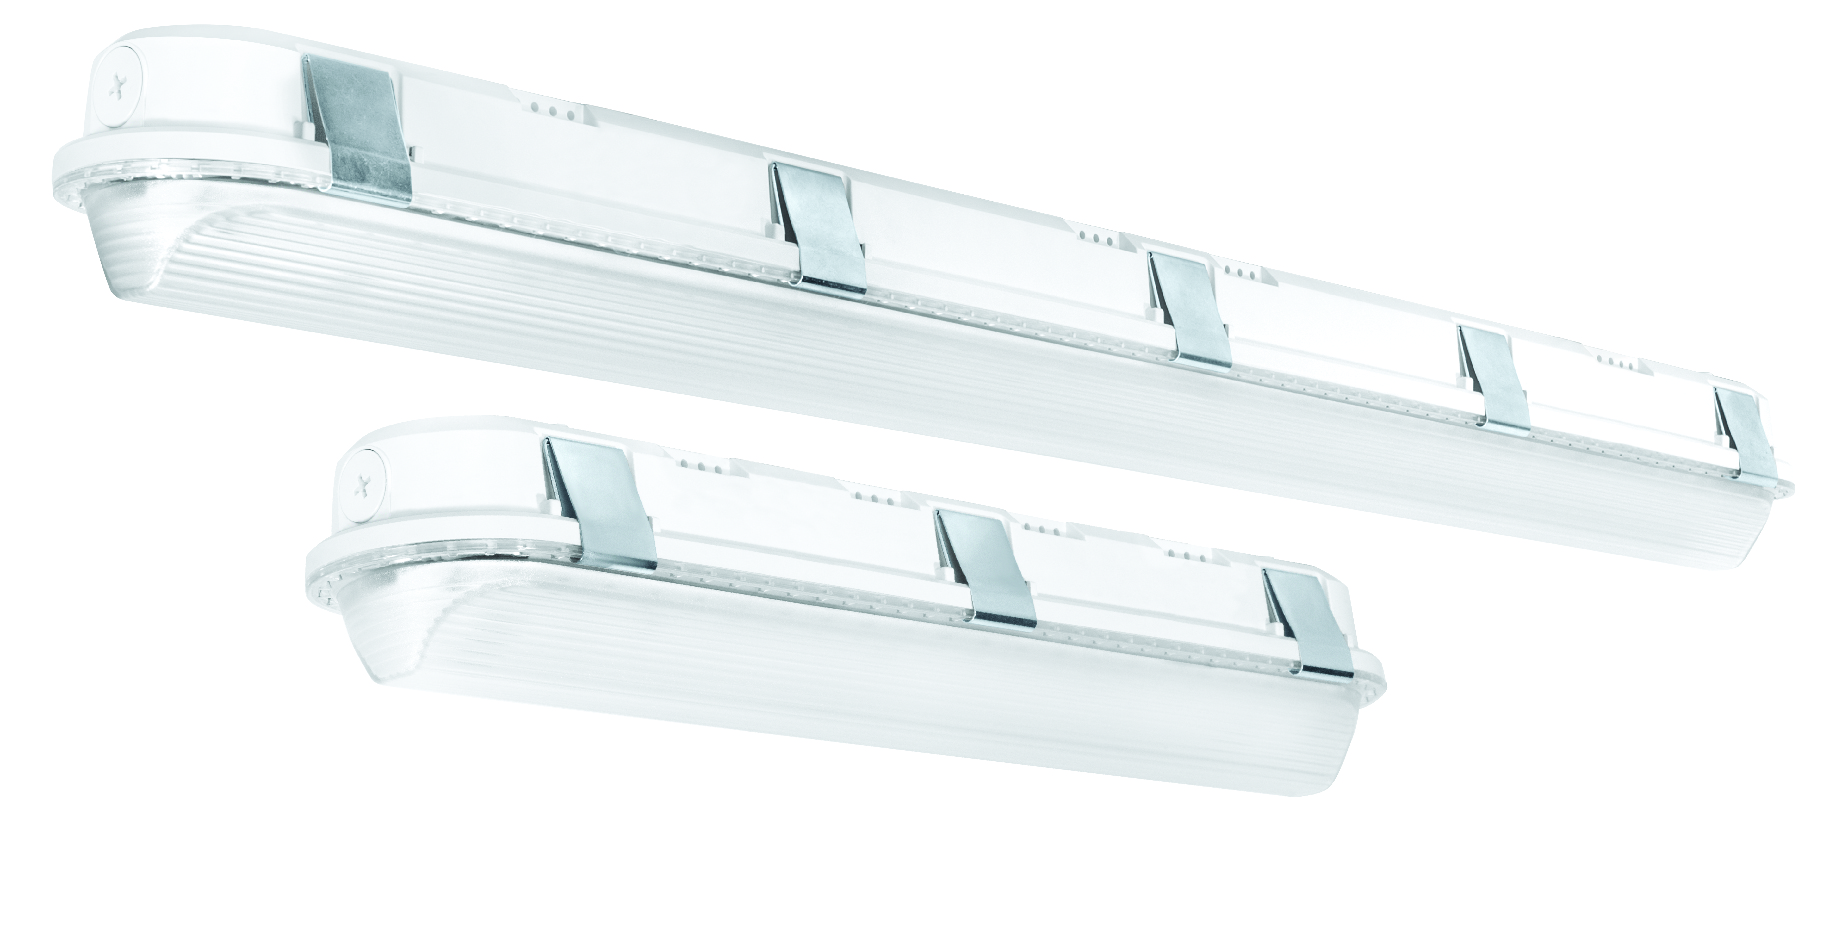 SHARK™ LED linear washdown fixture